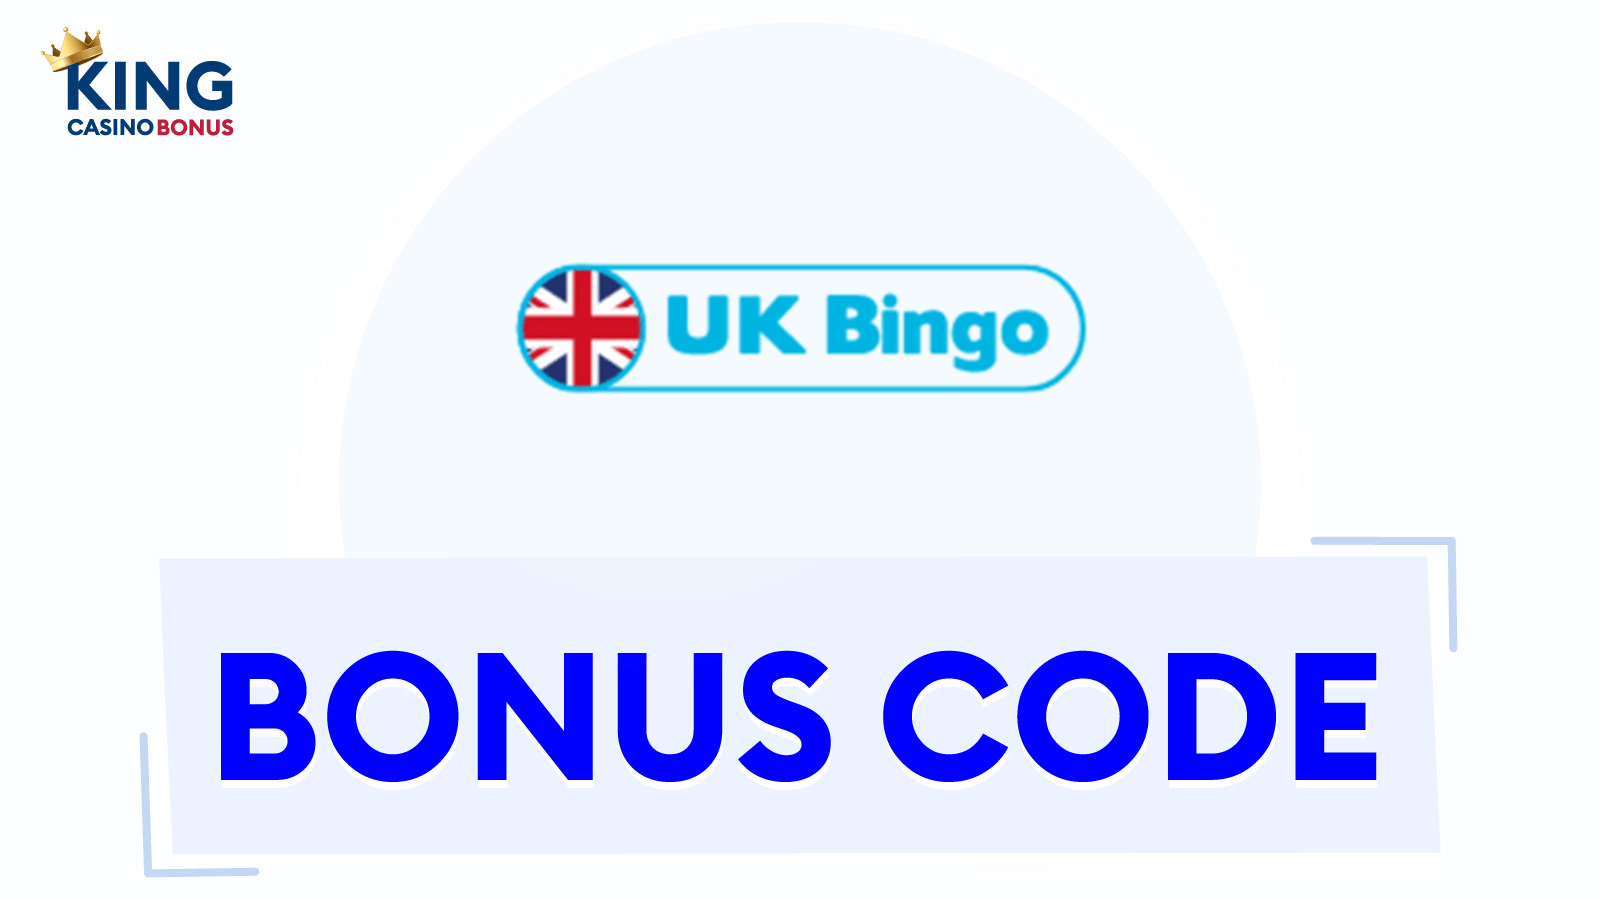 UK Bingo Casino Bonus Codes